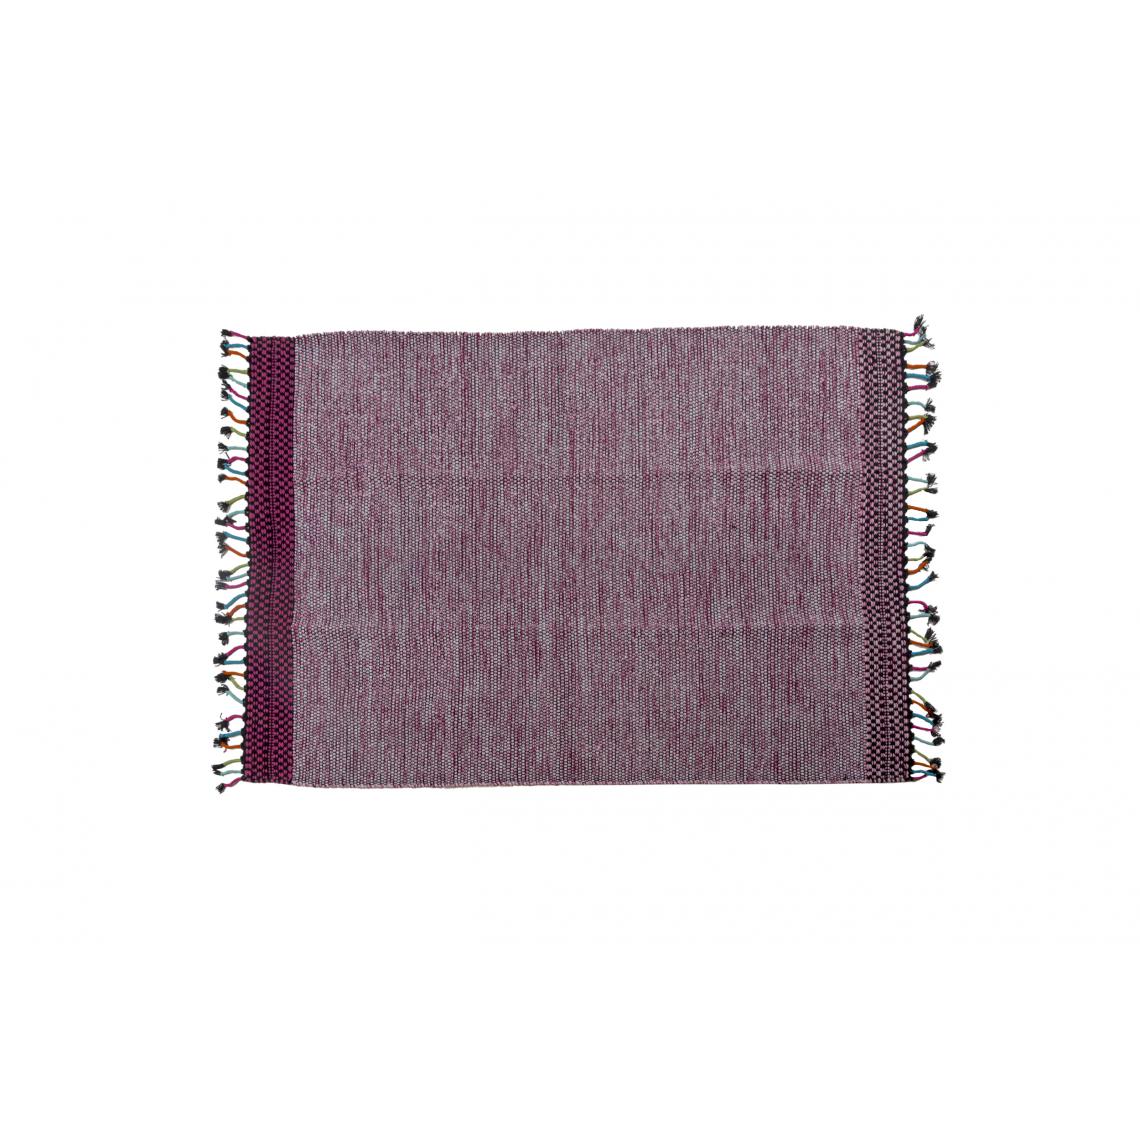 Alter - Tapis moderne Dallas, style kilim, 100% coton, rose, 230x160cm - Tapis